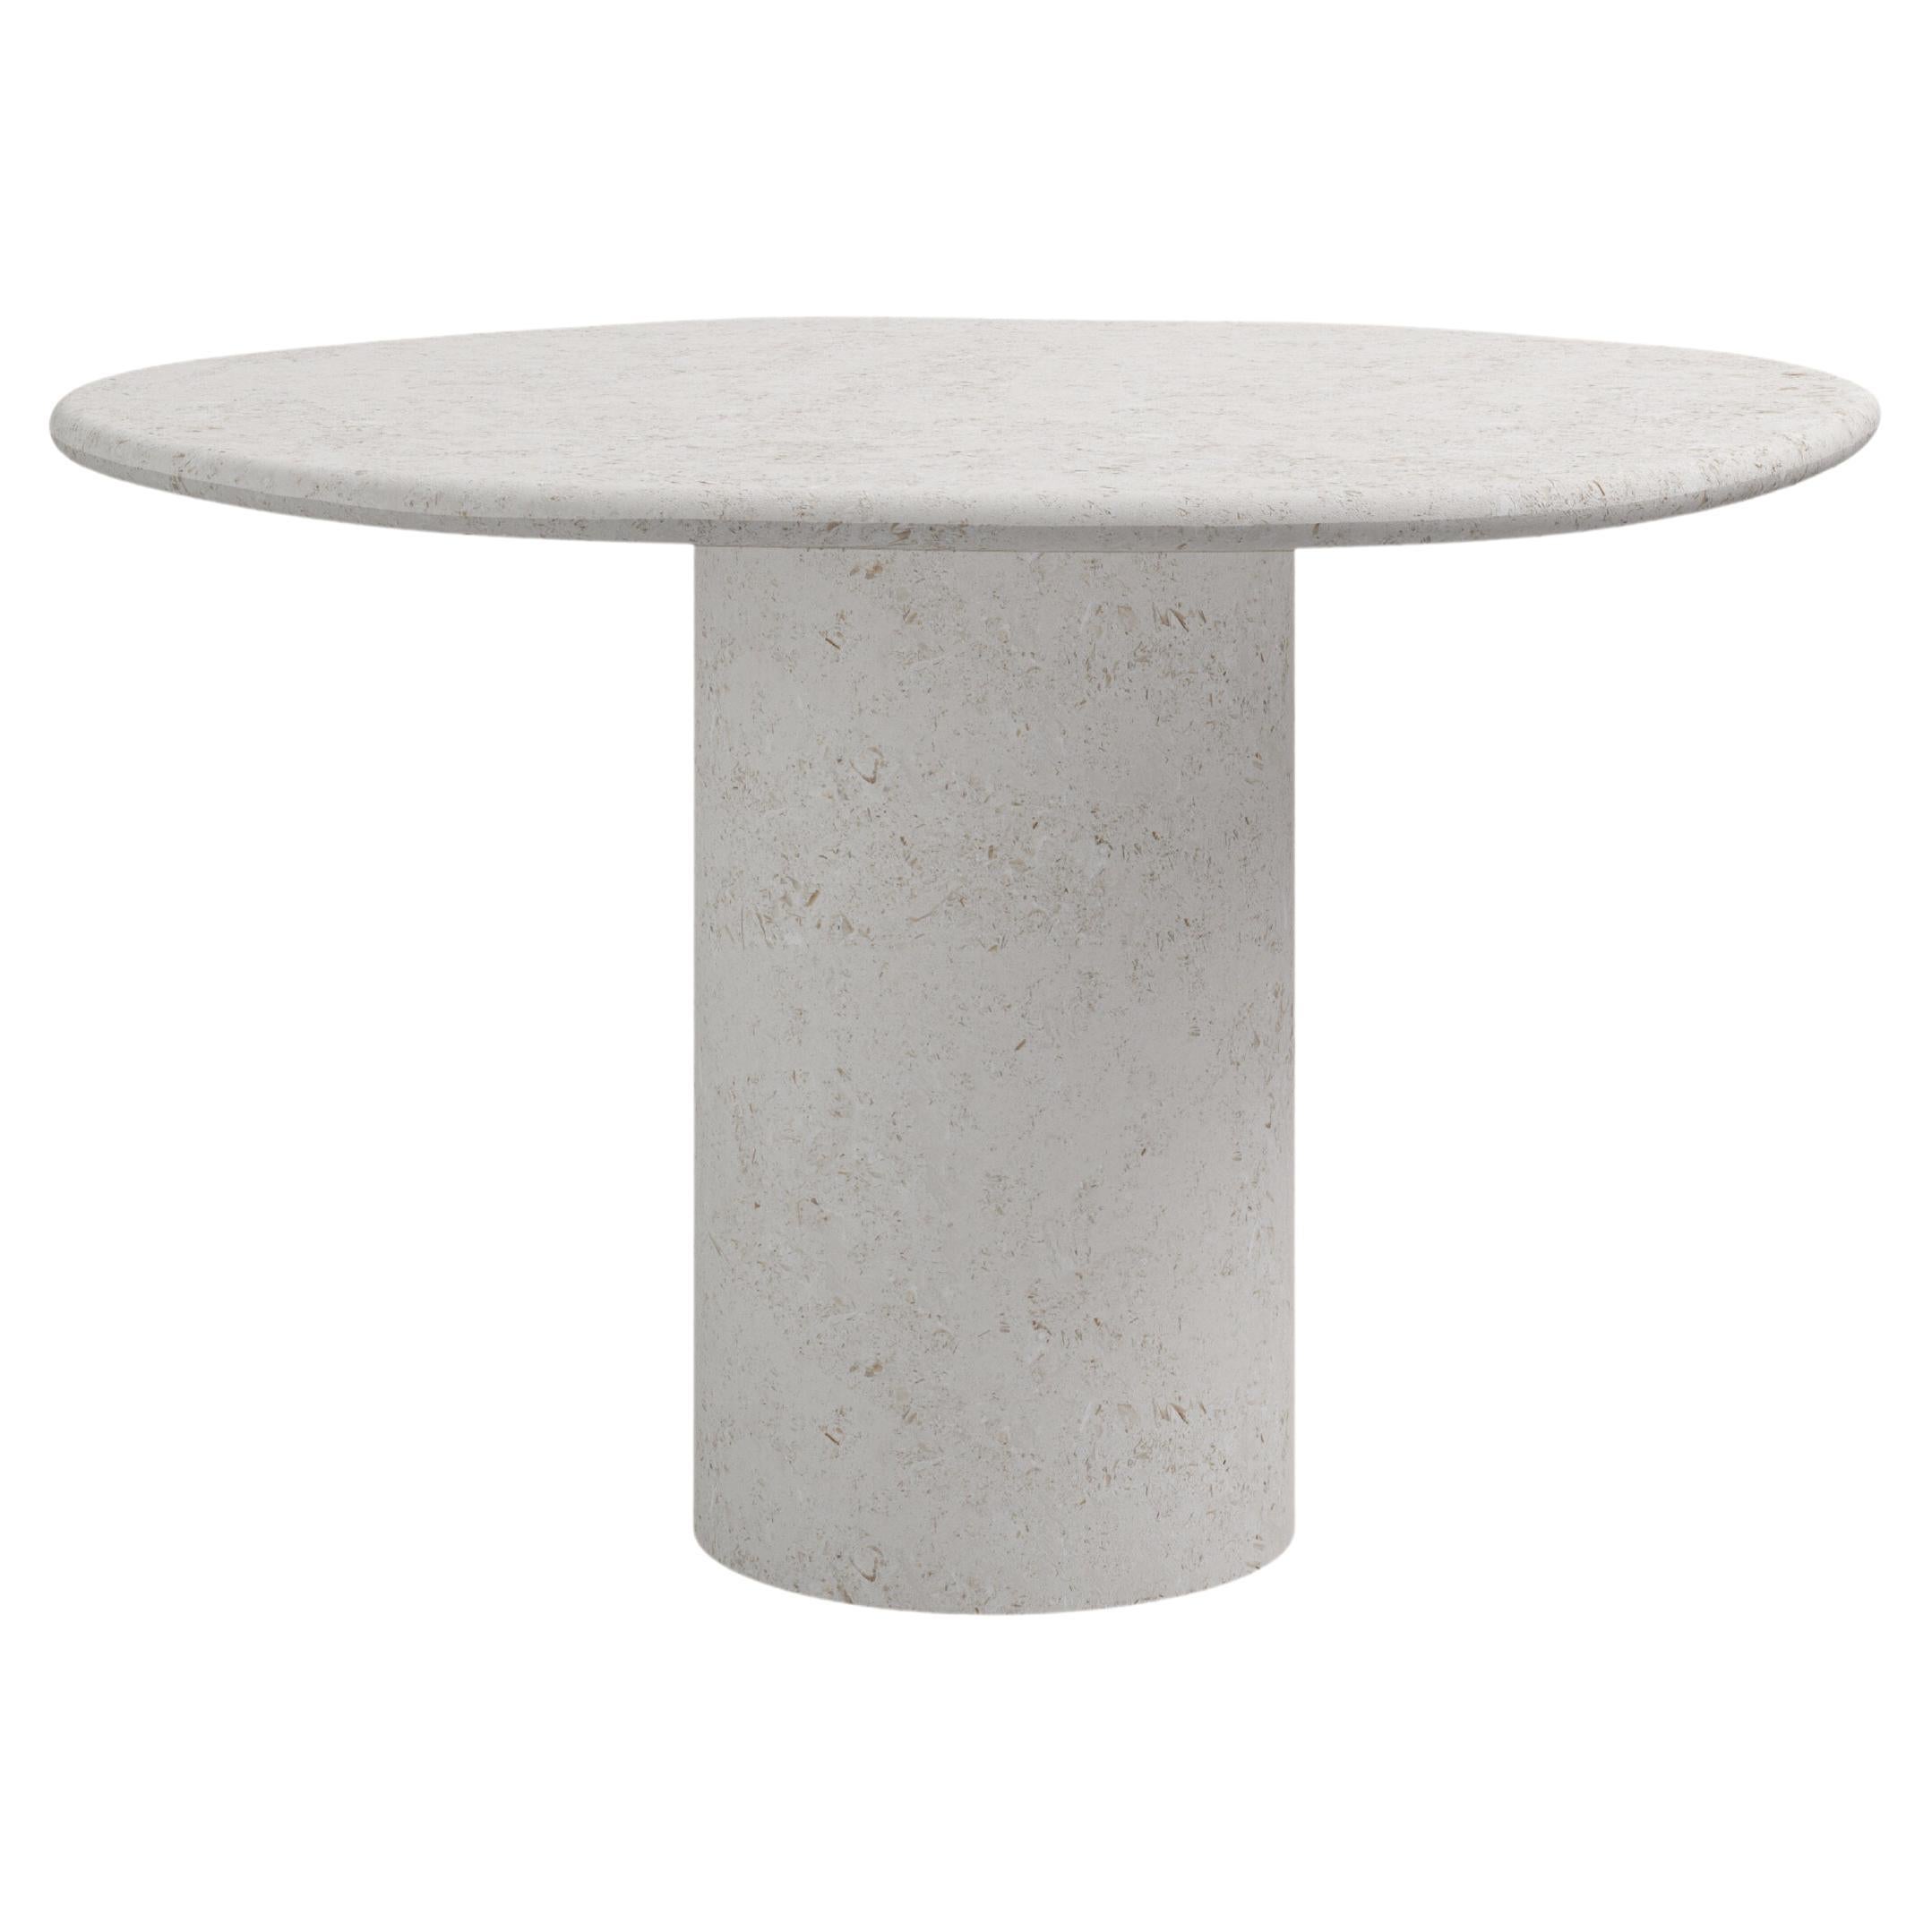 FORM(LA) Lago Round Dining Table 48”L x 48”W x 30”H Limestone Oceano For Sale